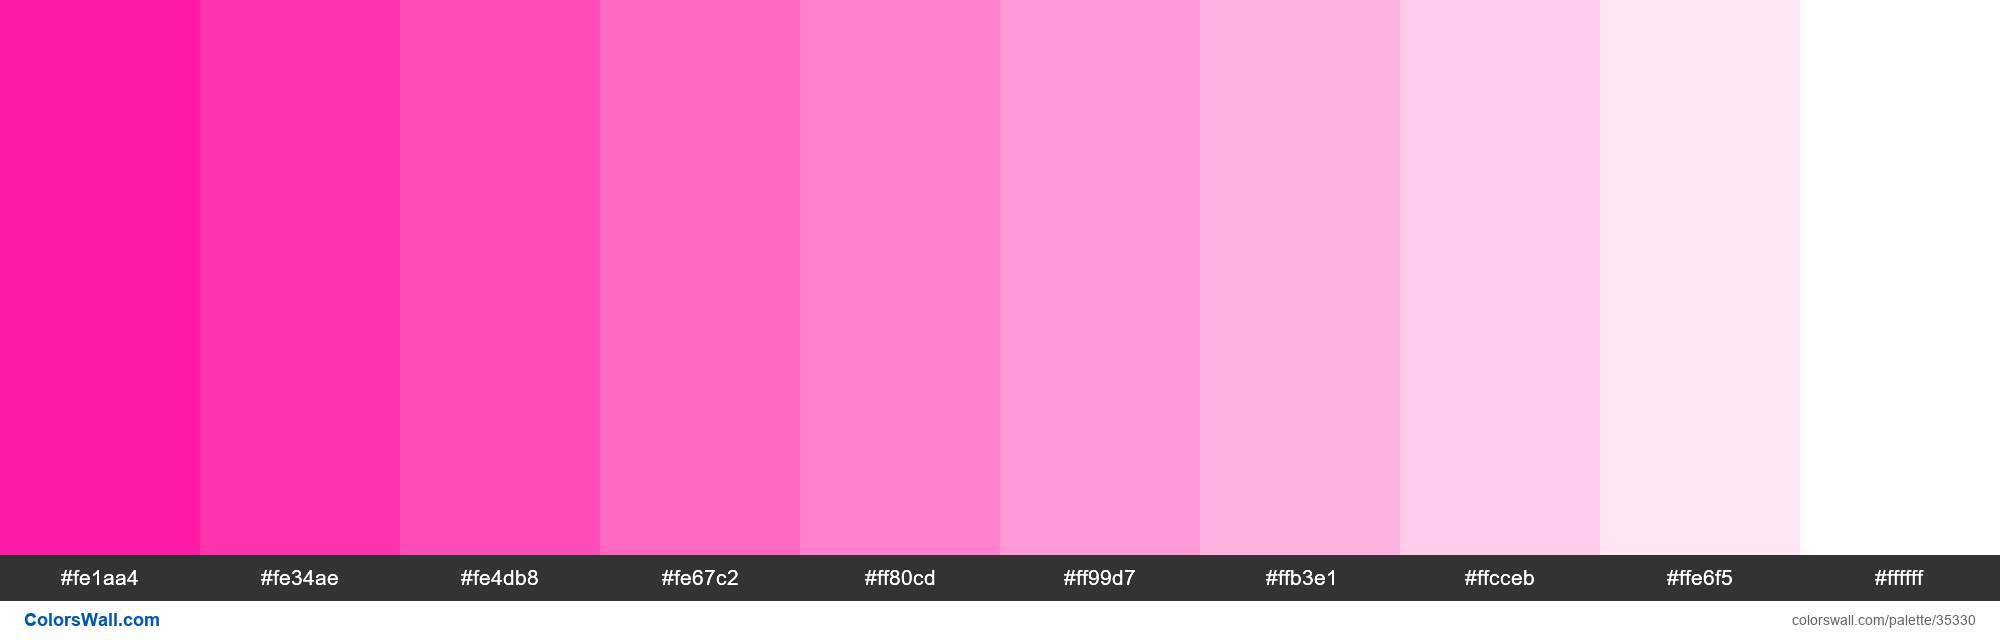 colorswall on X: Tints XKCD Color neon pink #fe019a hex #fe1aa4, #fe34ae,  #fe4db8, #fe67c2, #ff80cd, #ff99d7, #ffb3e1, #ffcceb, #ffe6f5, #ffffff  #colors #palette   / X